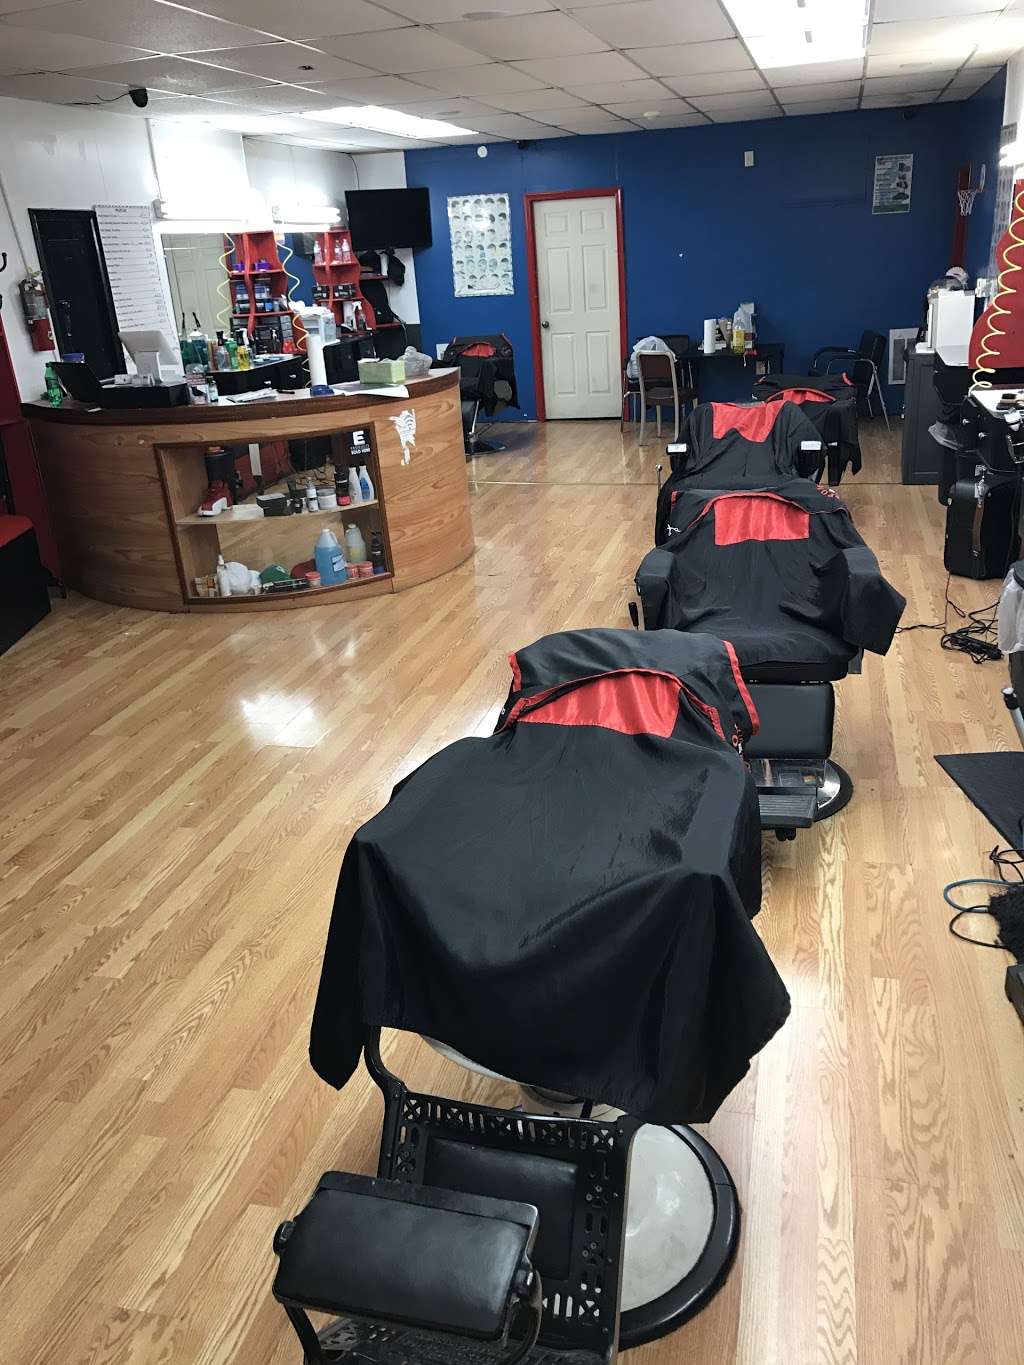 Pompys Best View Barber Shop | 11 N Main St, Chambersburg, PA 17201 | Phone: (717) 816-0521